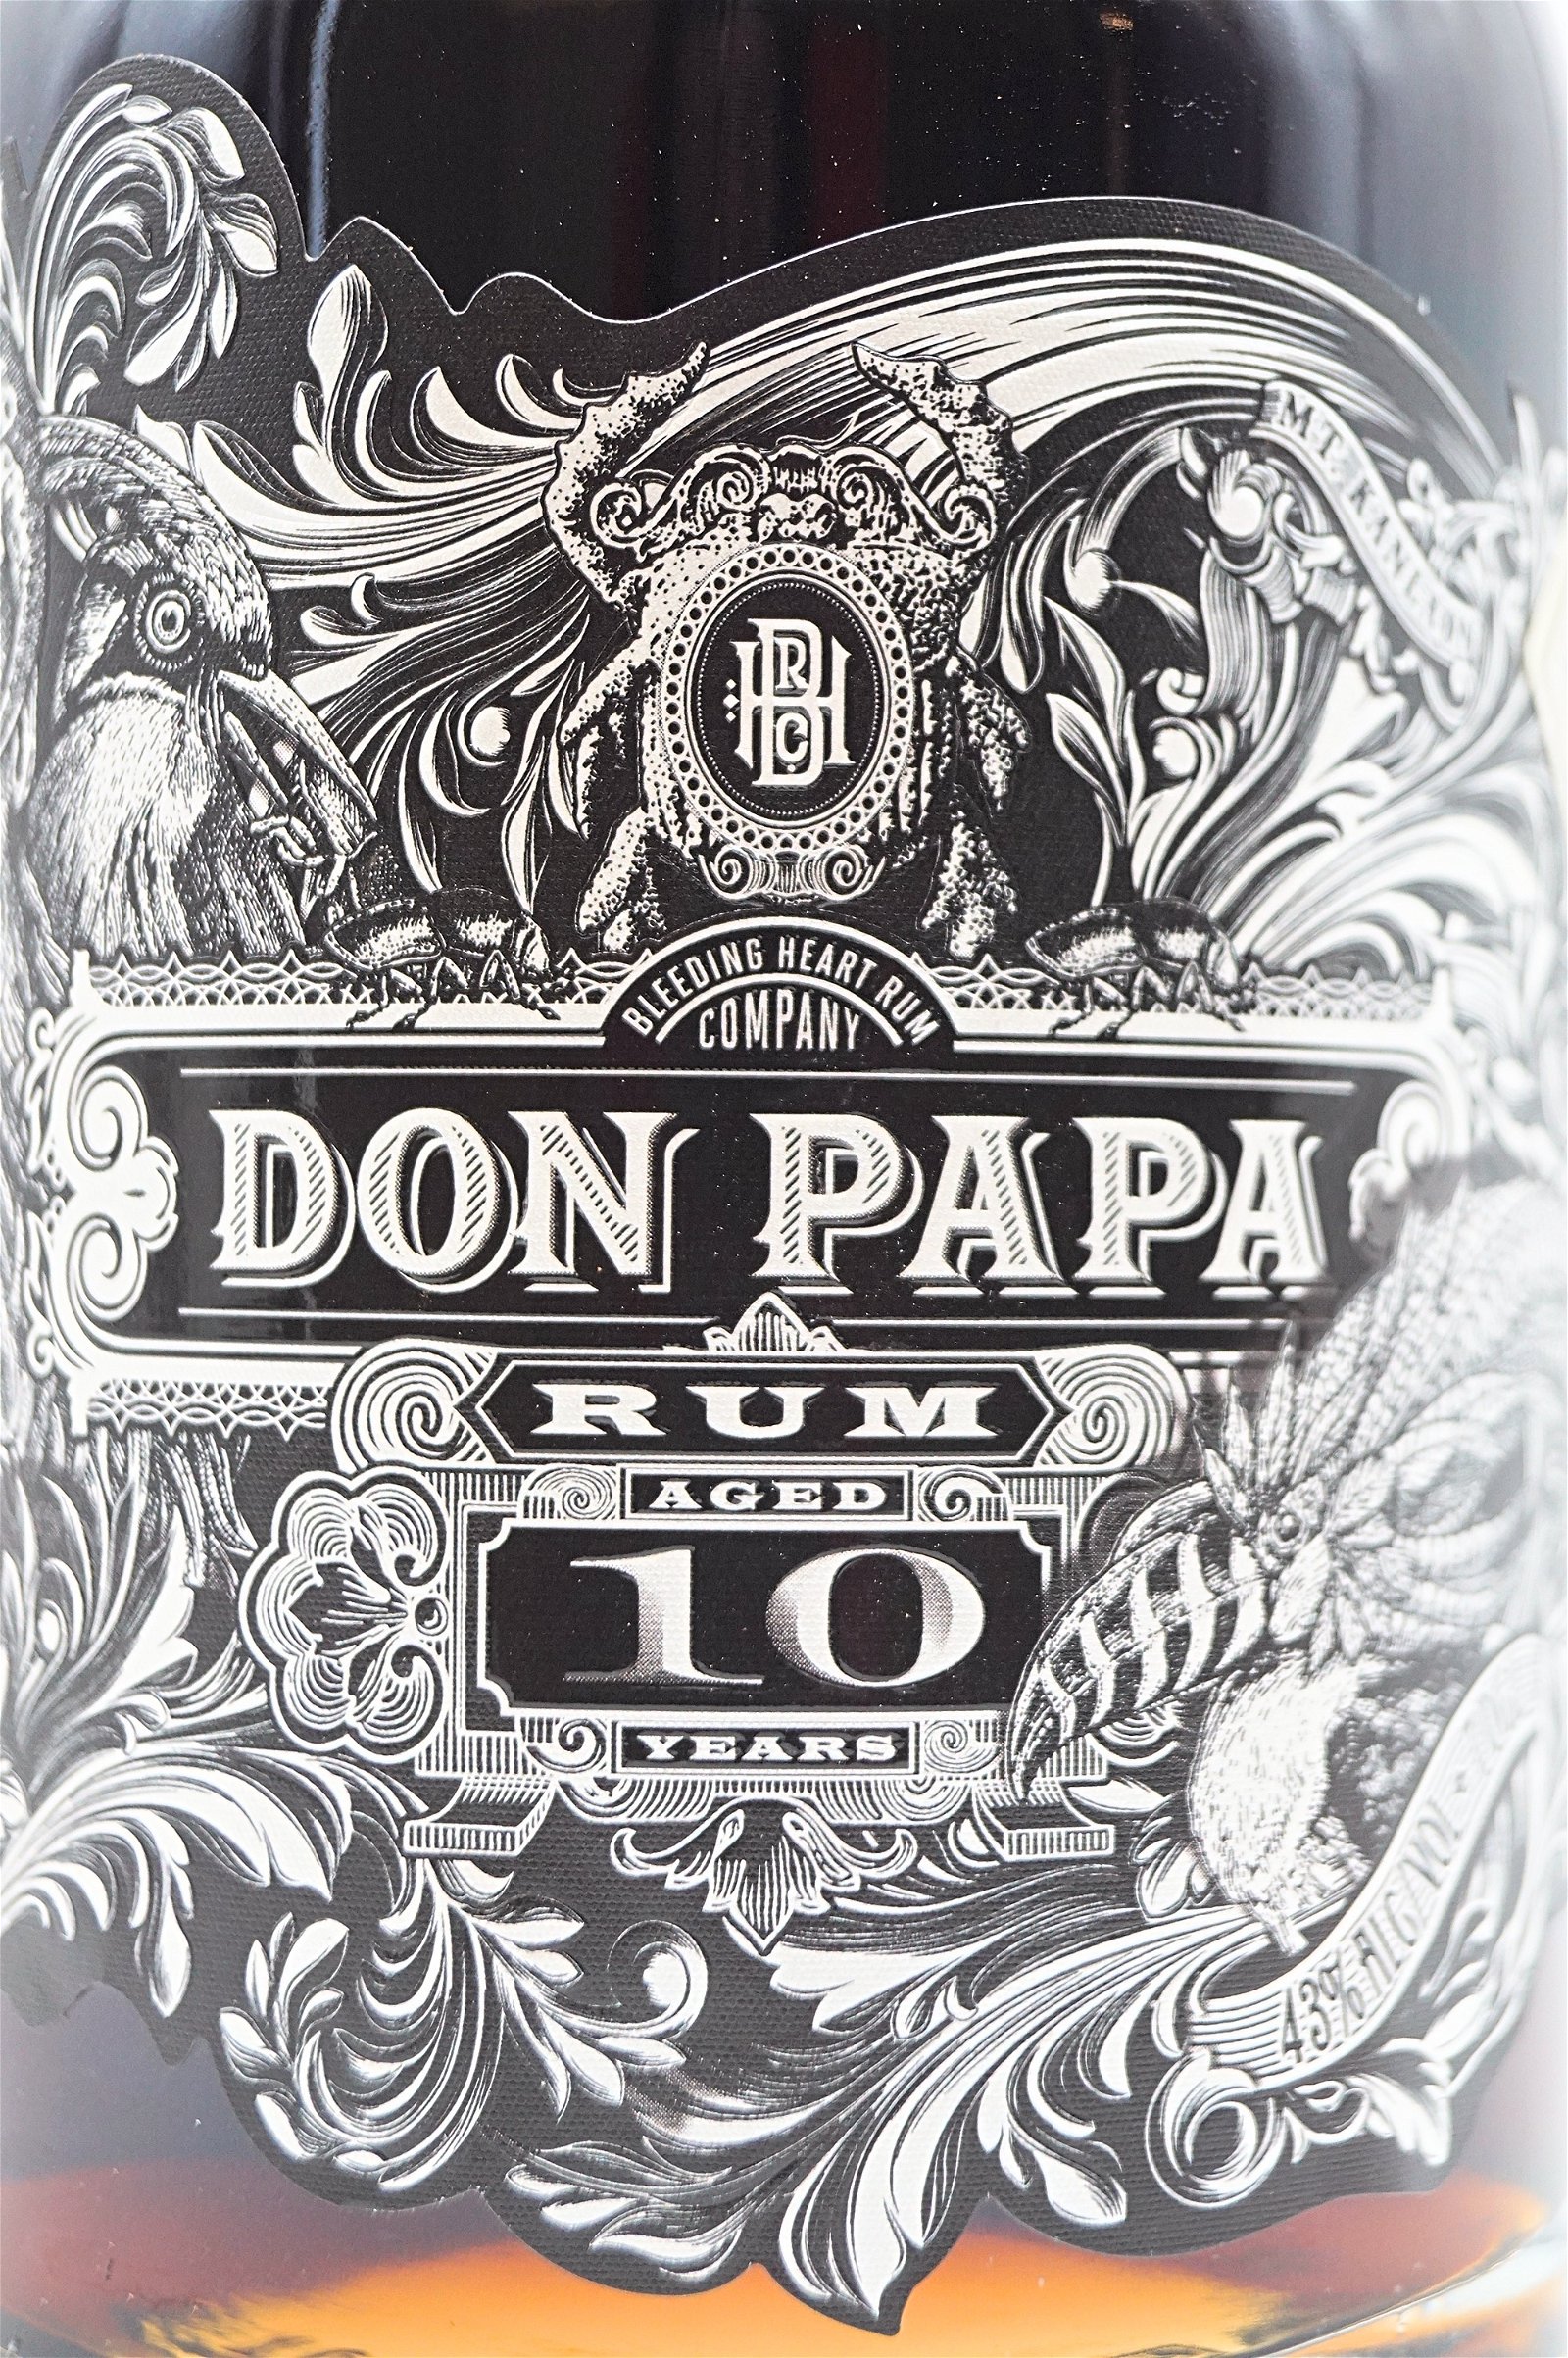 Don Papa Rum 10 Jahre